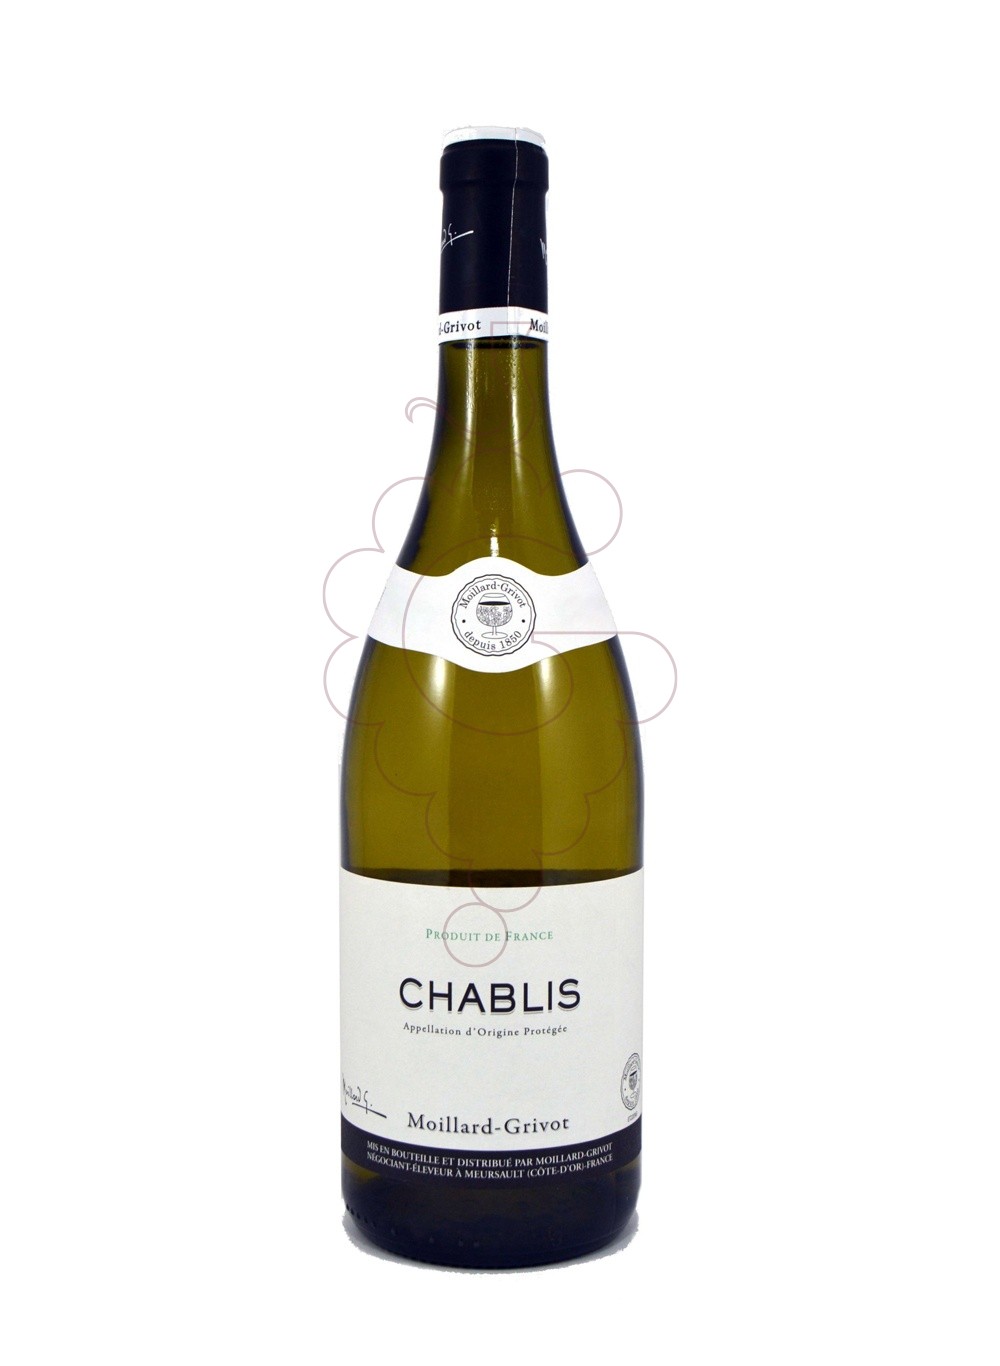 Foto Moillard-Grivot Chablis vino blanco